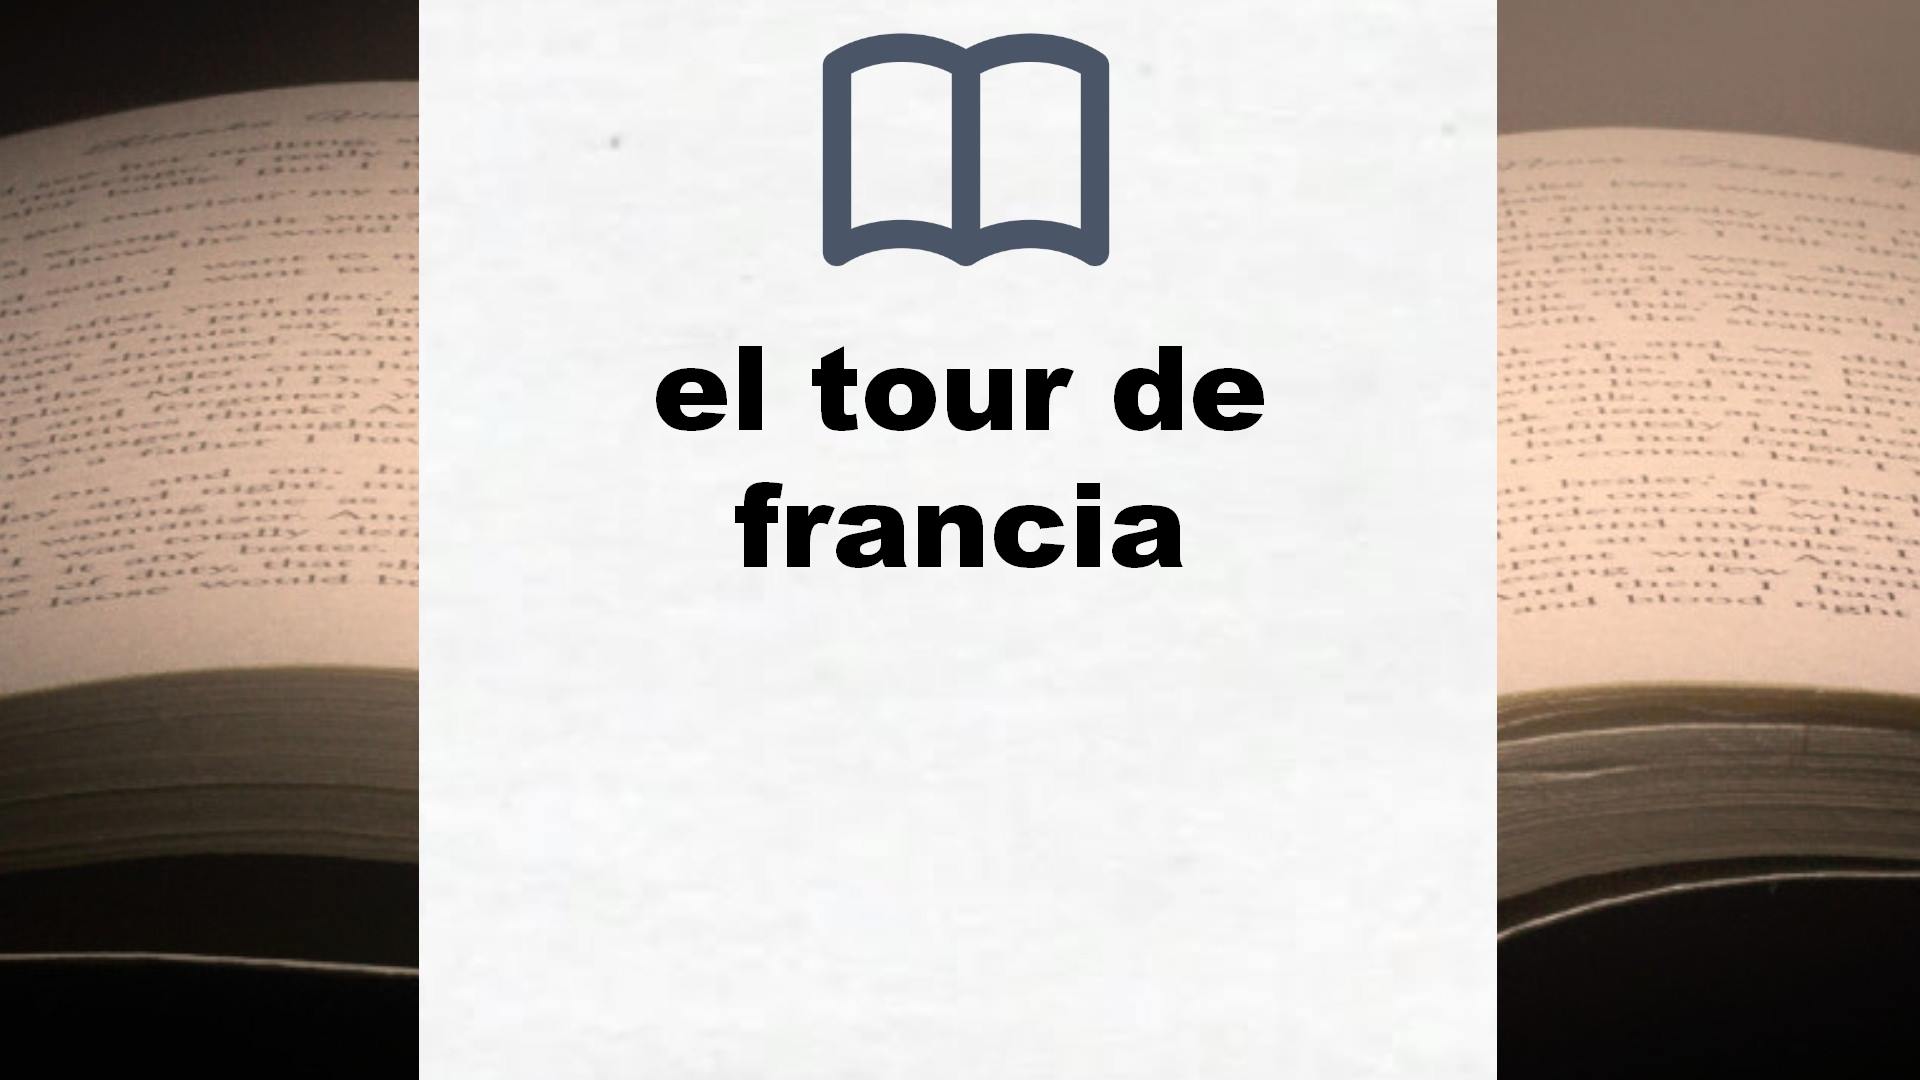 Libros sobre el tour de francia